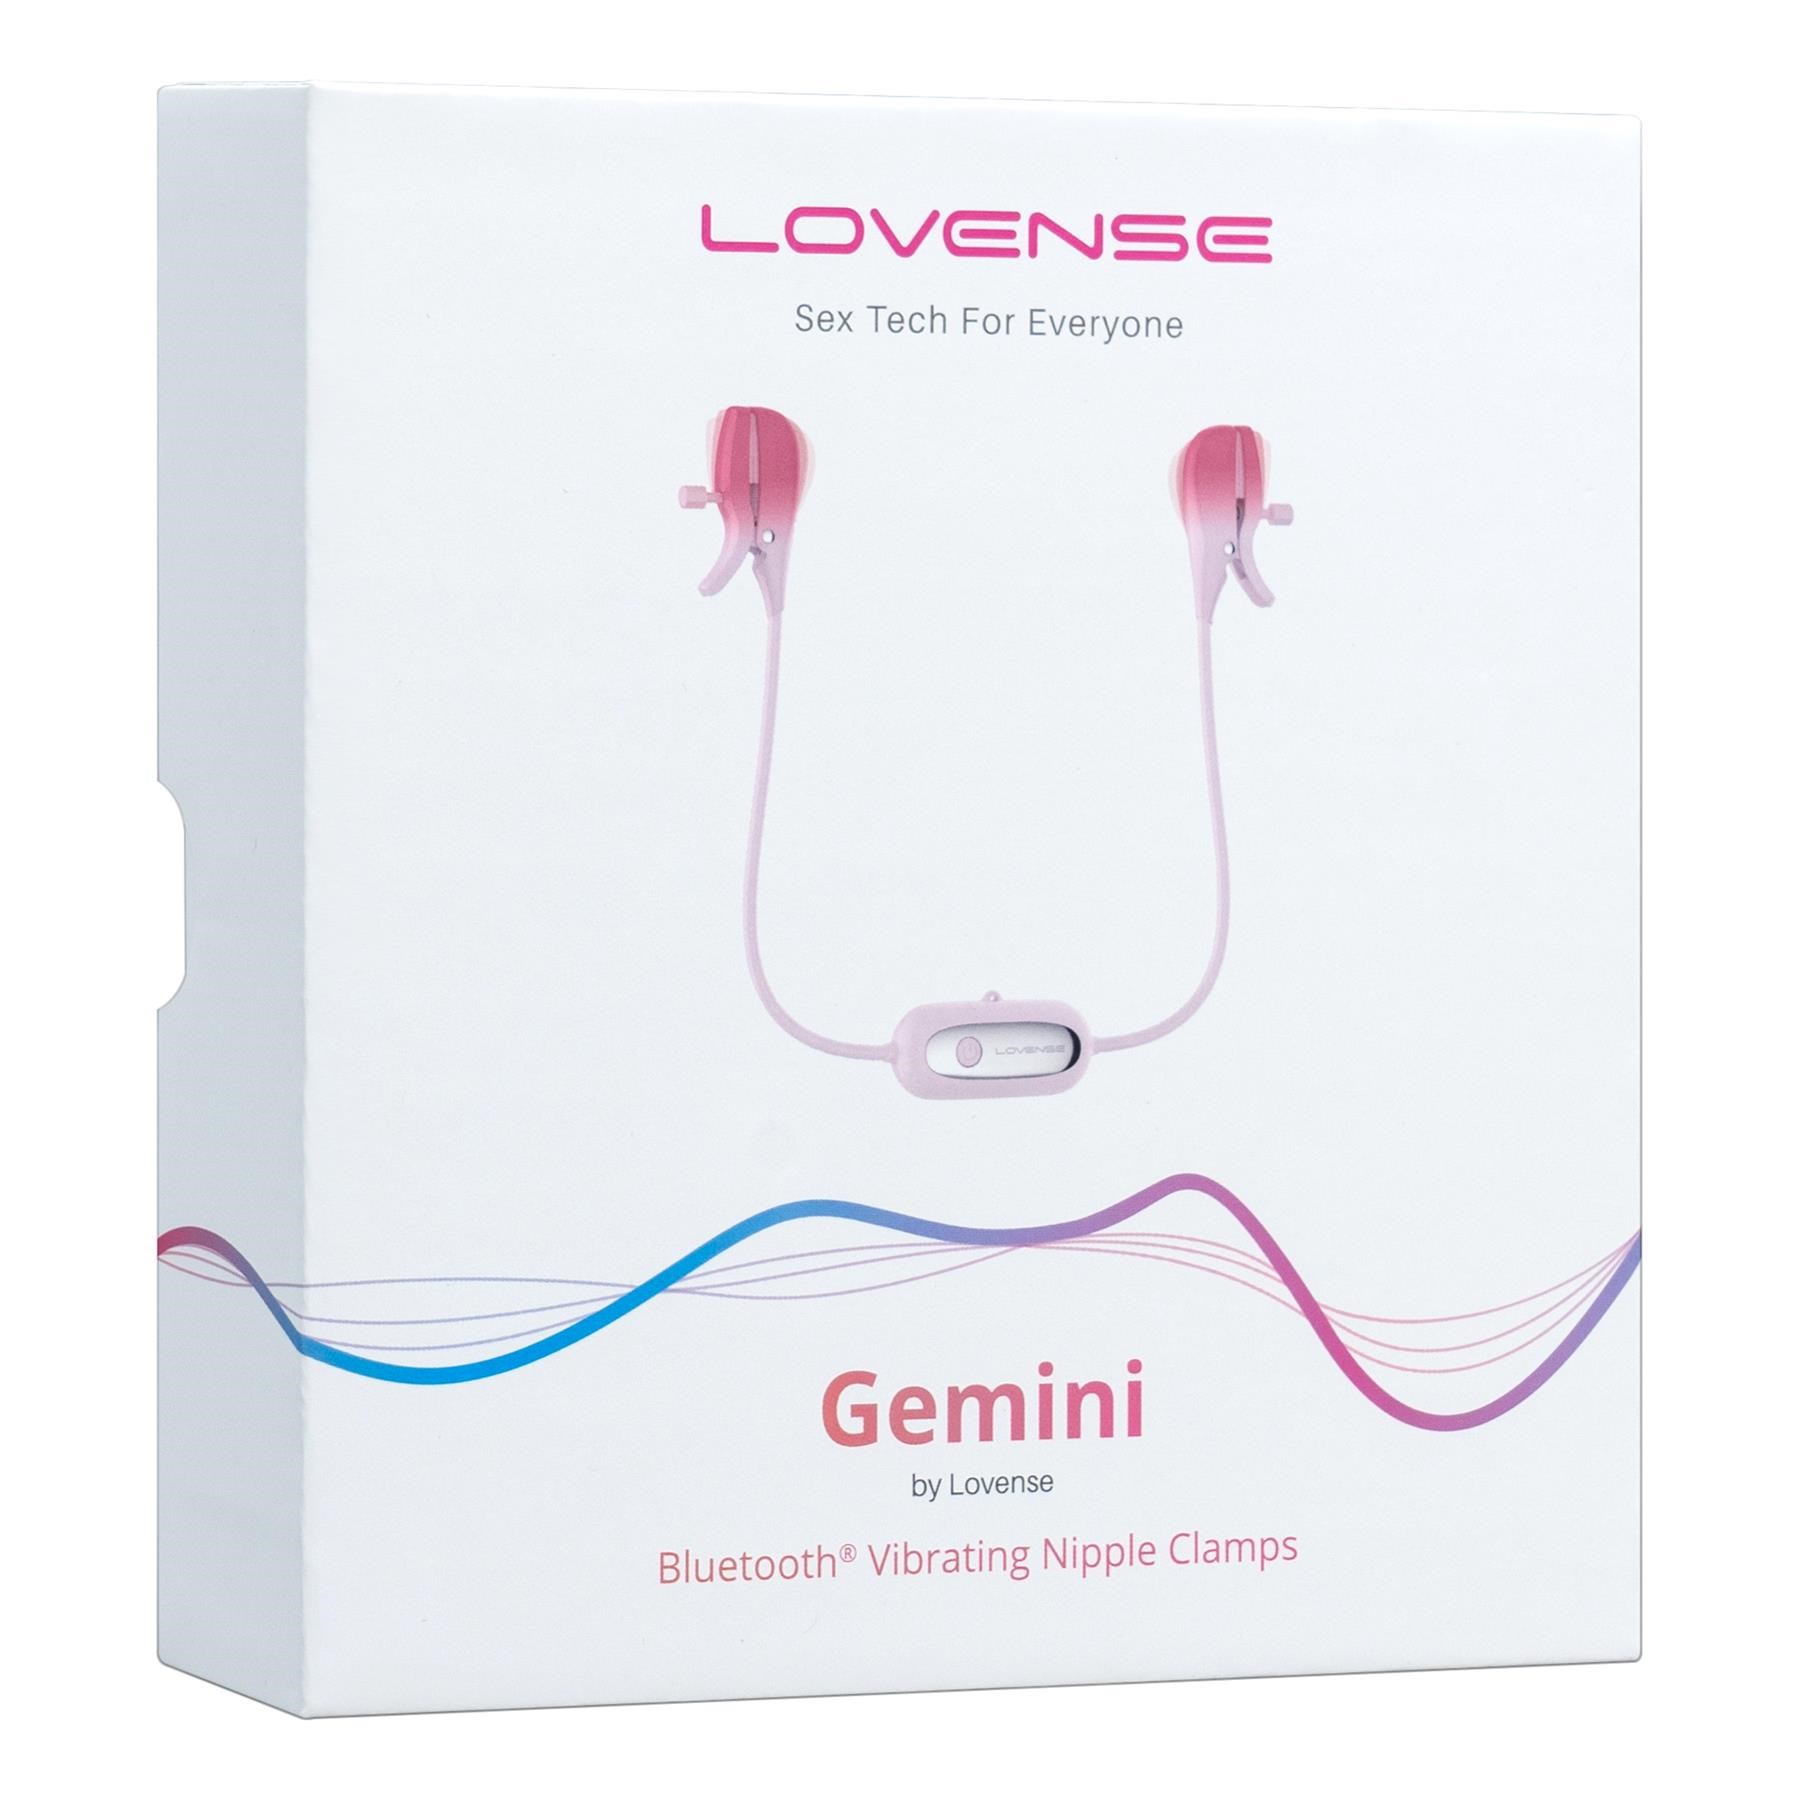 Lovense Gemini Bluetooth Vibrating Nipple Stimulators - Packaging